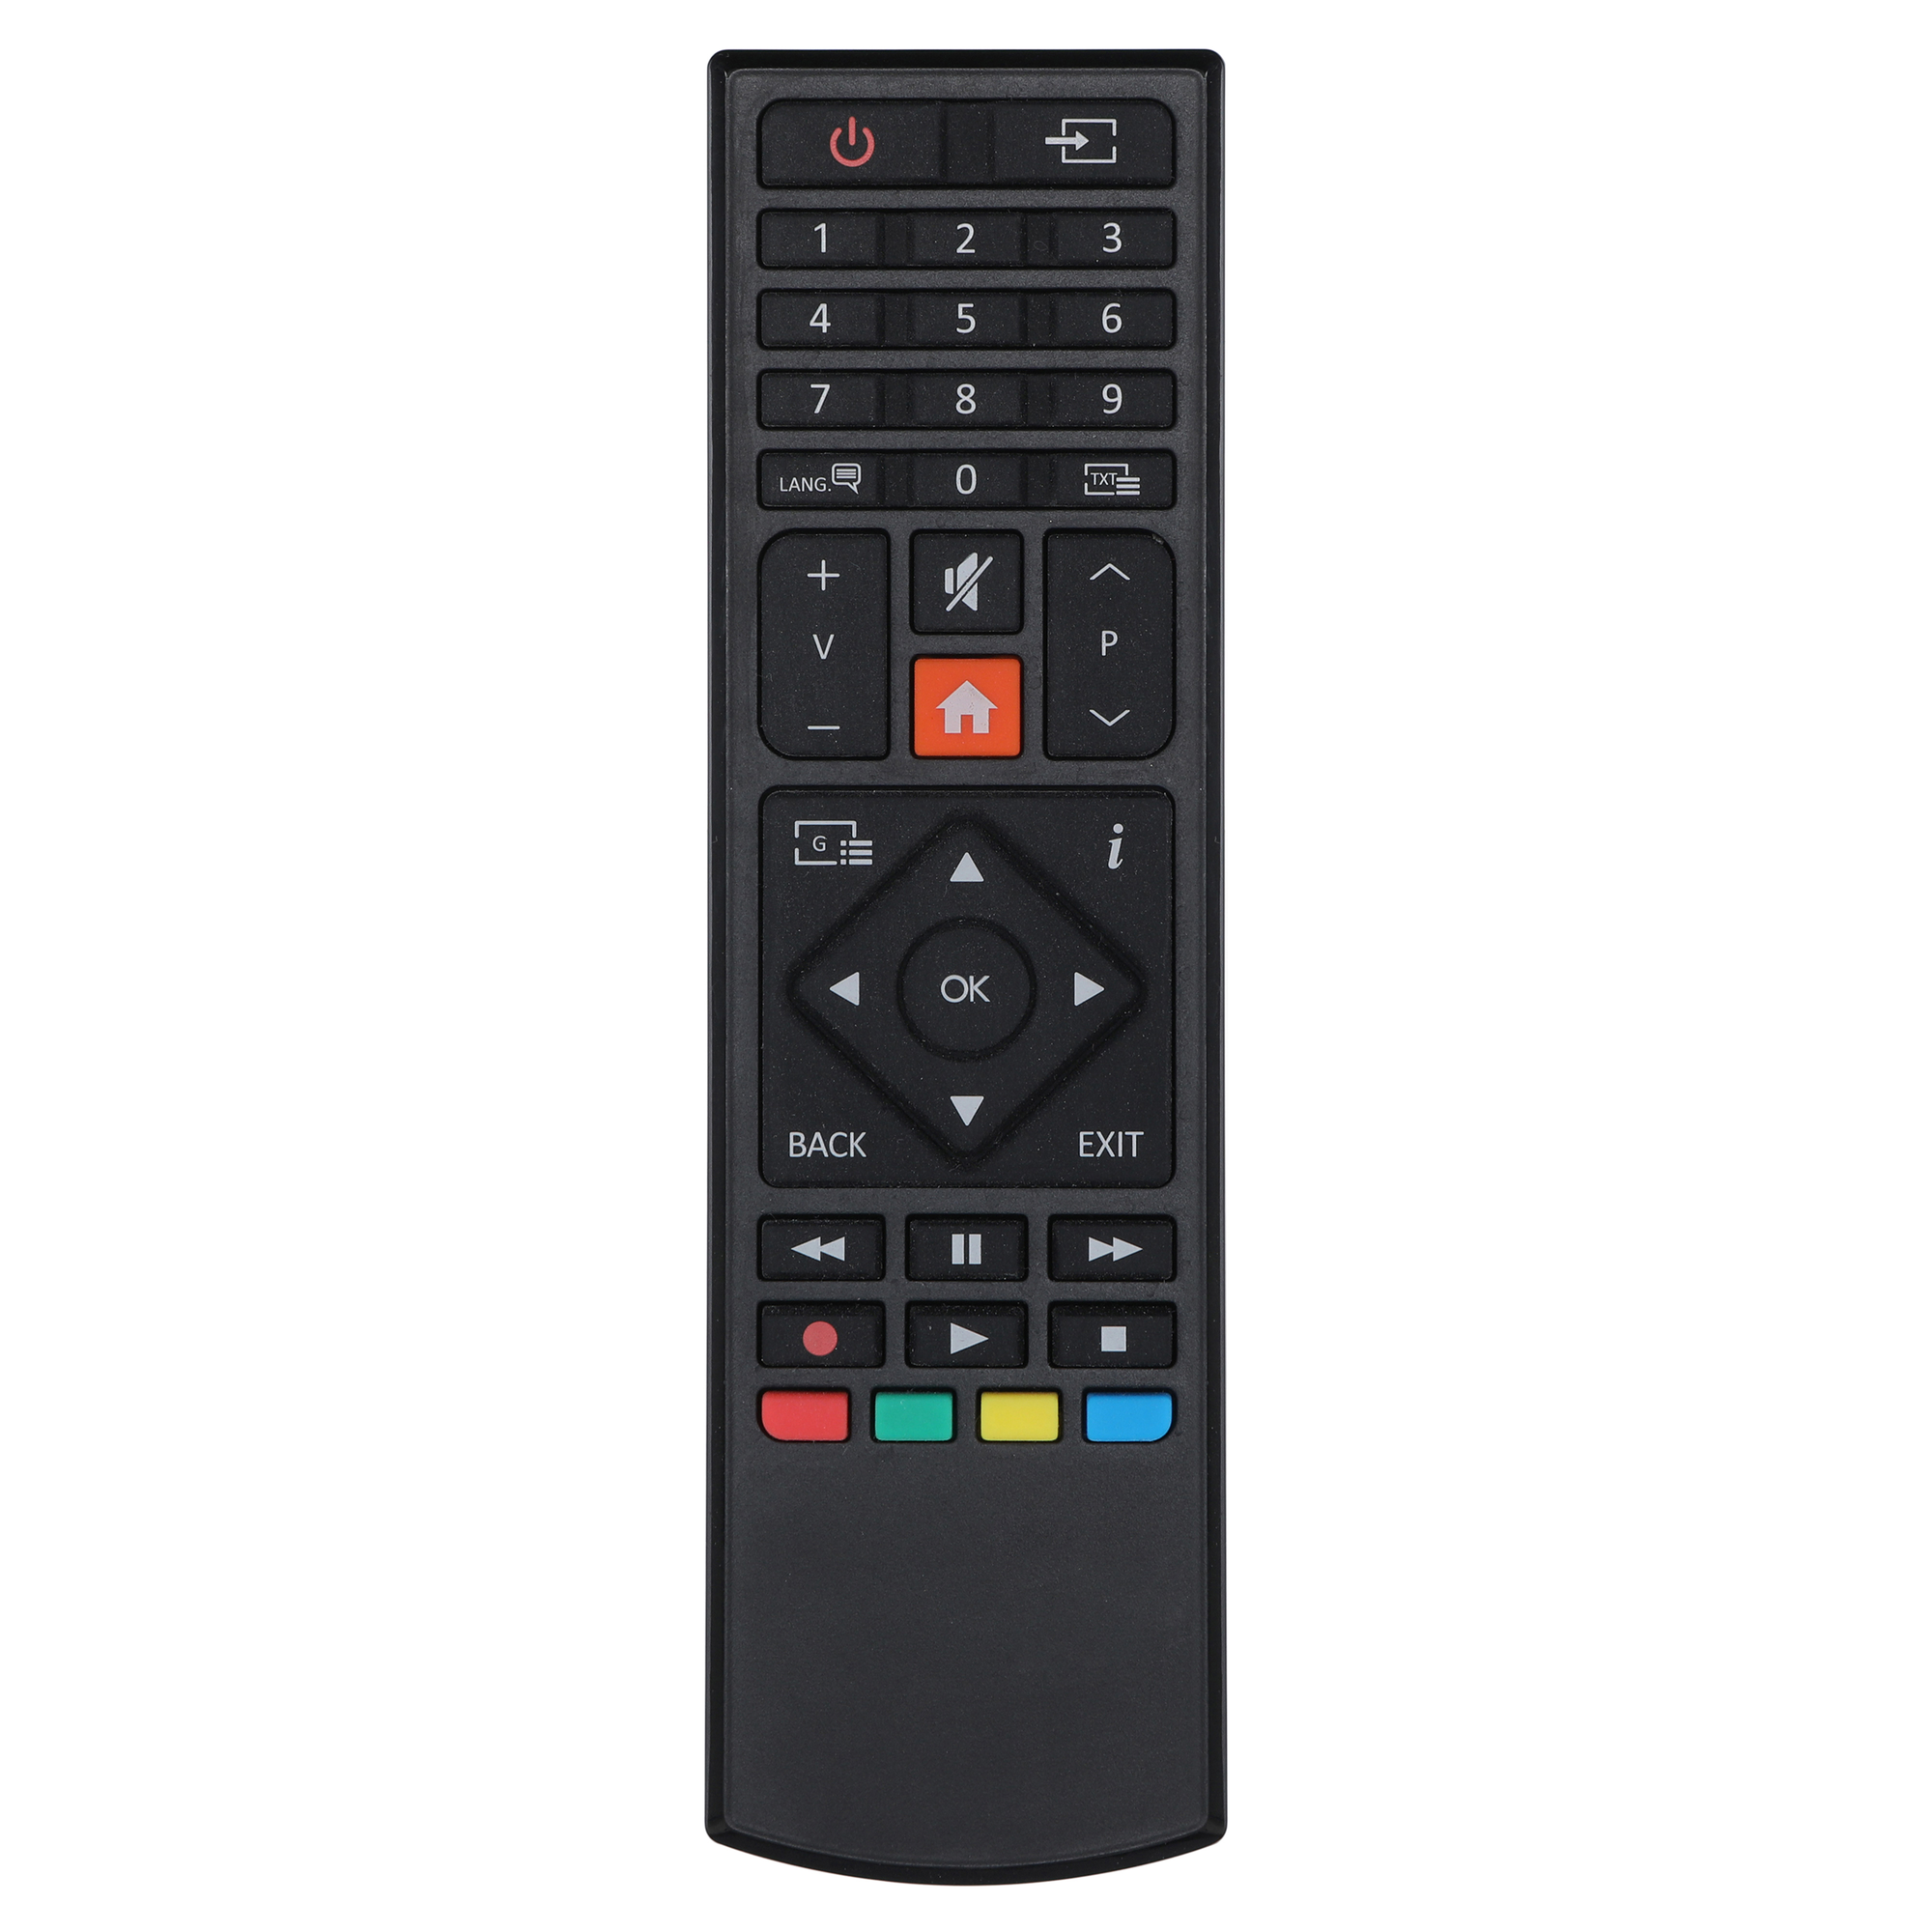 TV 24 / LED-2423BK cm, LENCO HD) LED Zoll 61 (Flat,